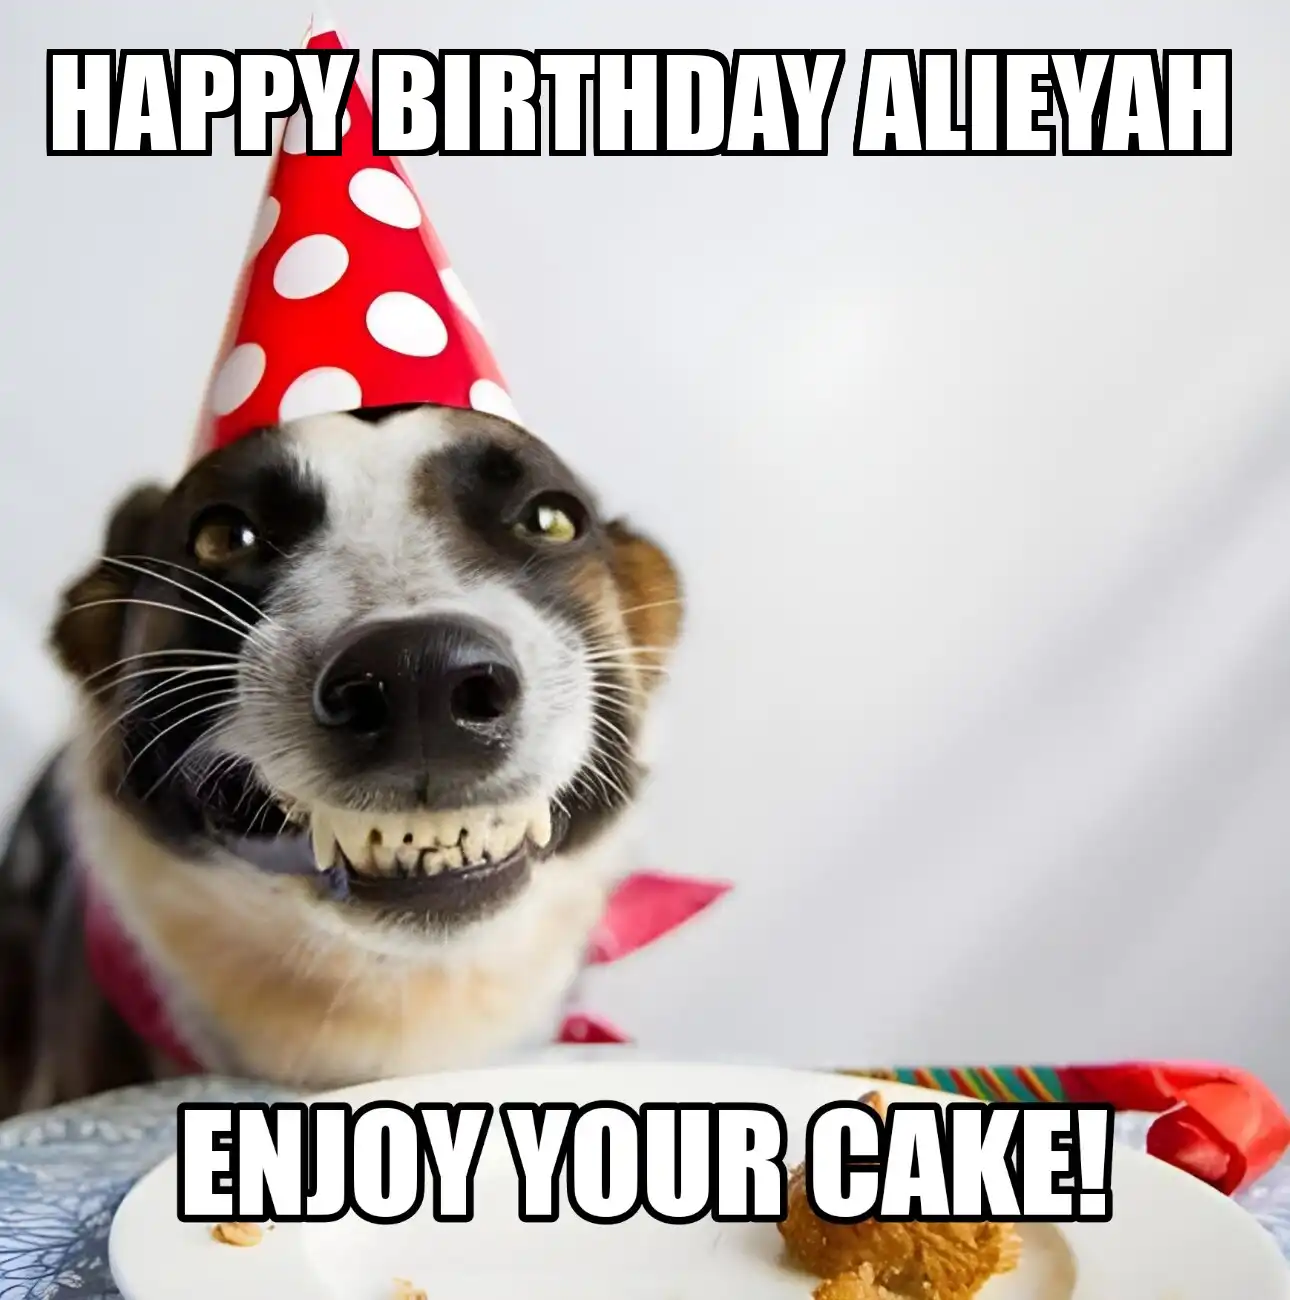 Happy Birthday Alieyah Enjoy Your Cake Dog Meme